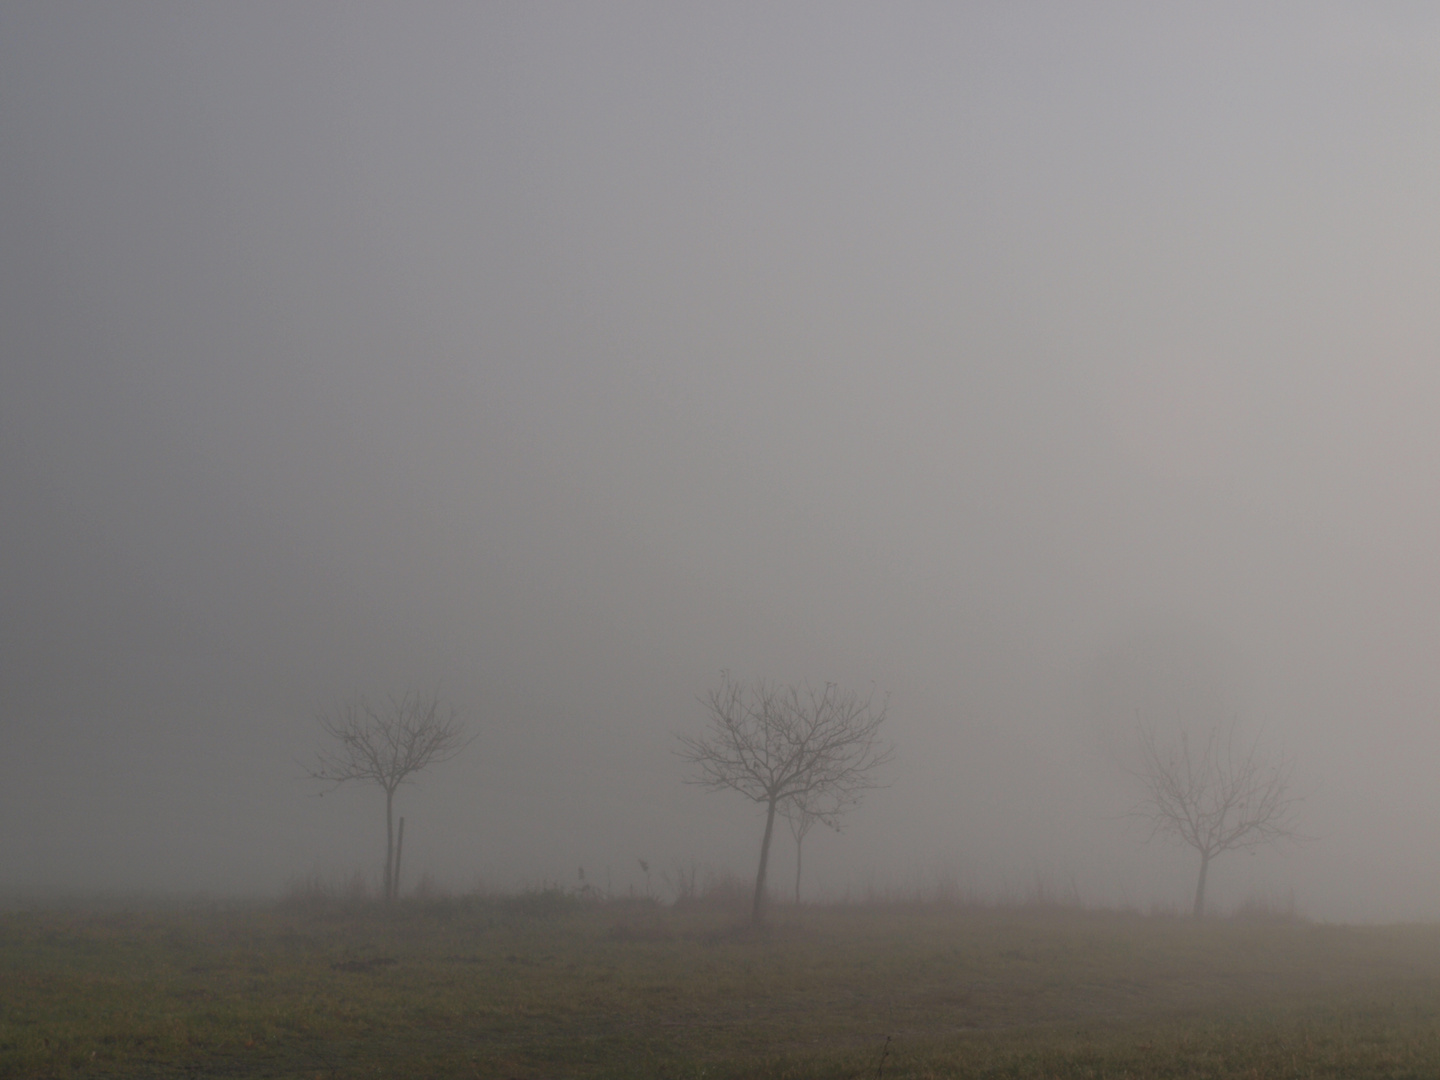 Nebel im Westerwald